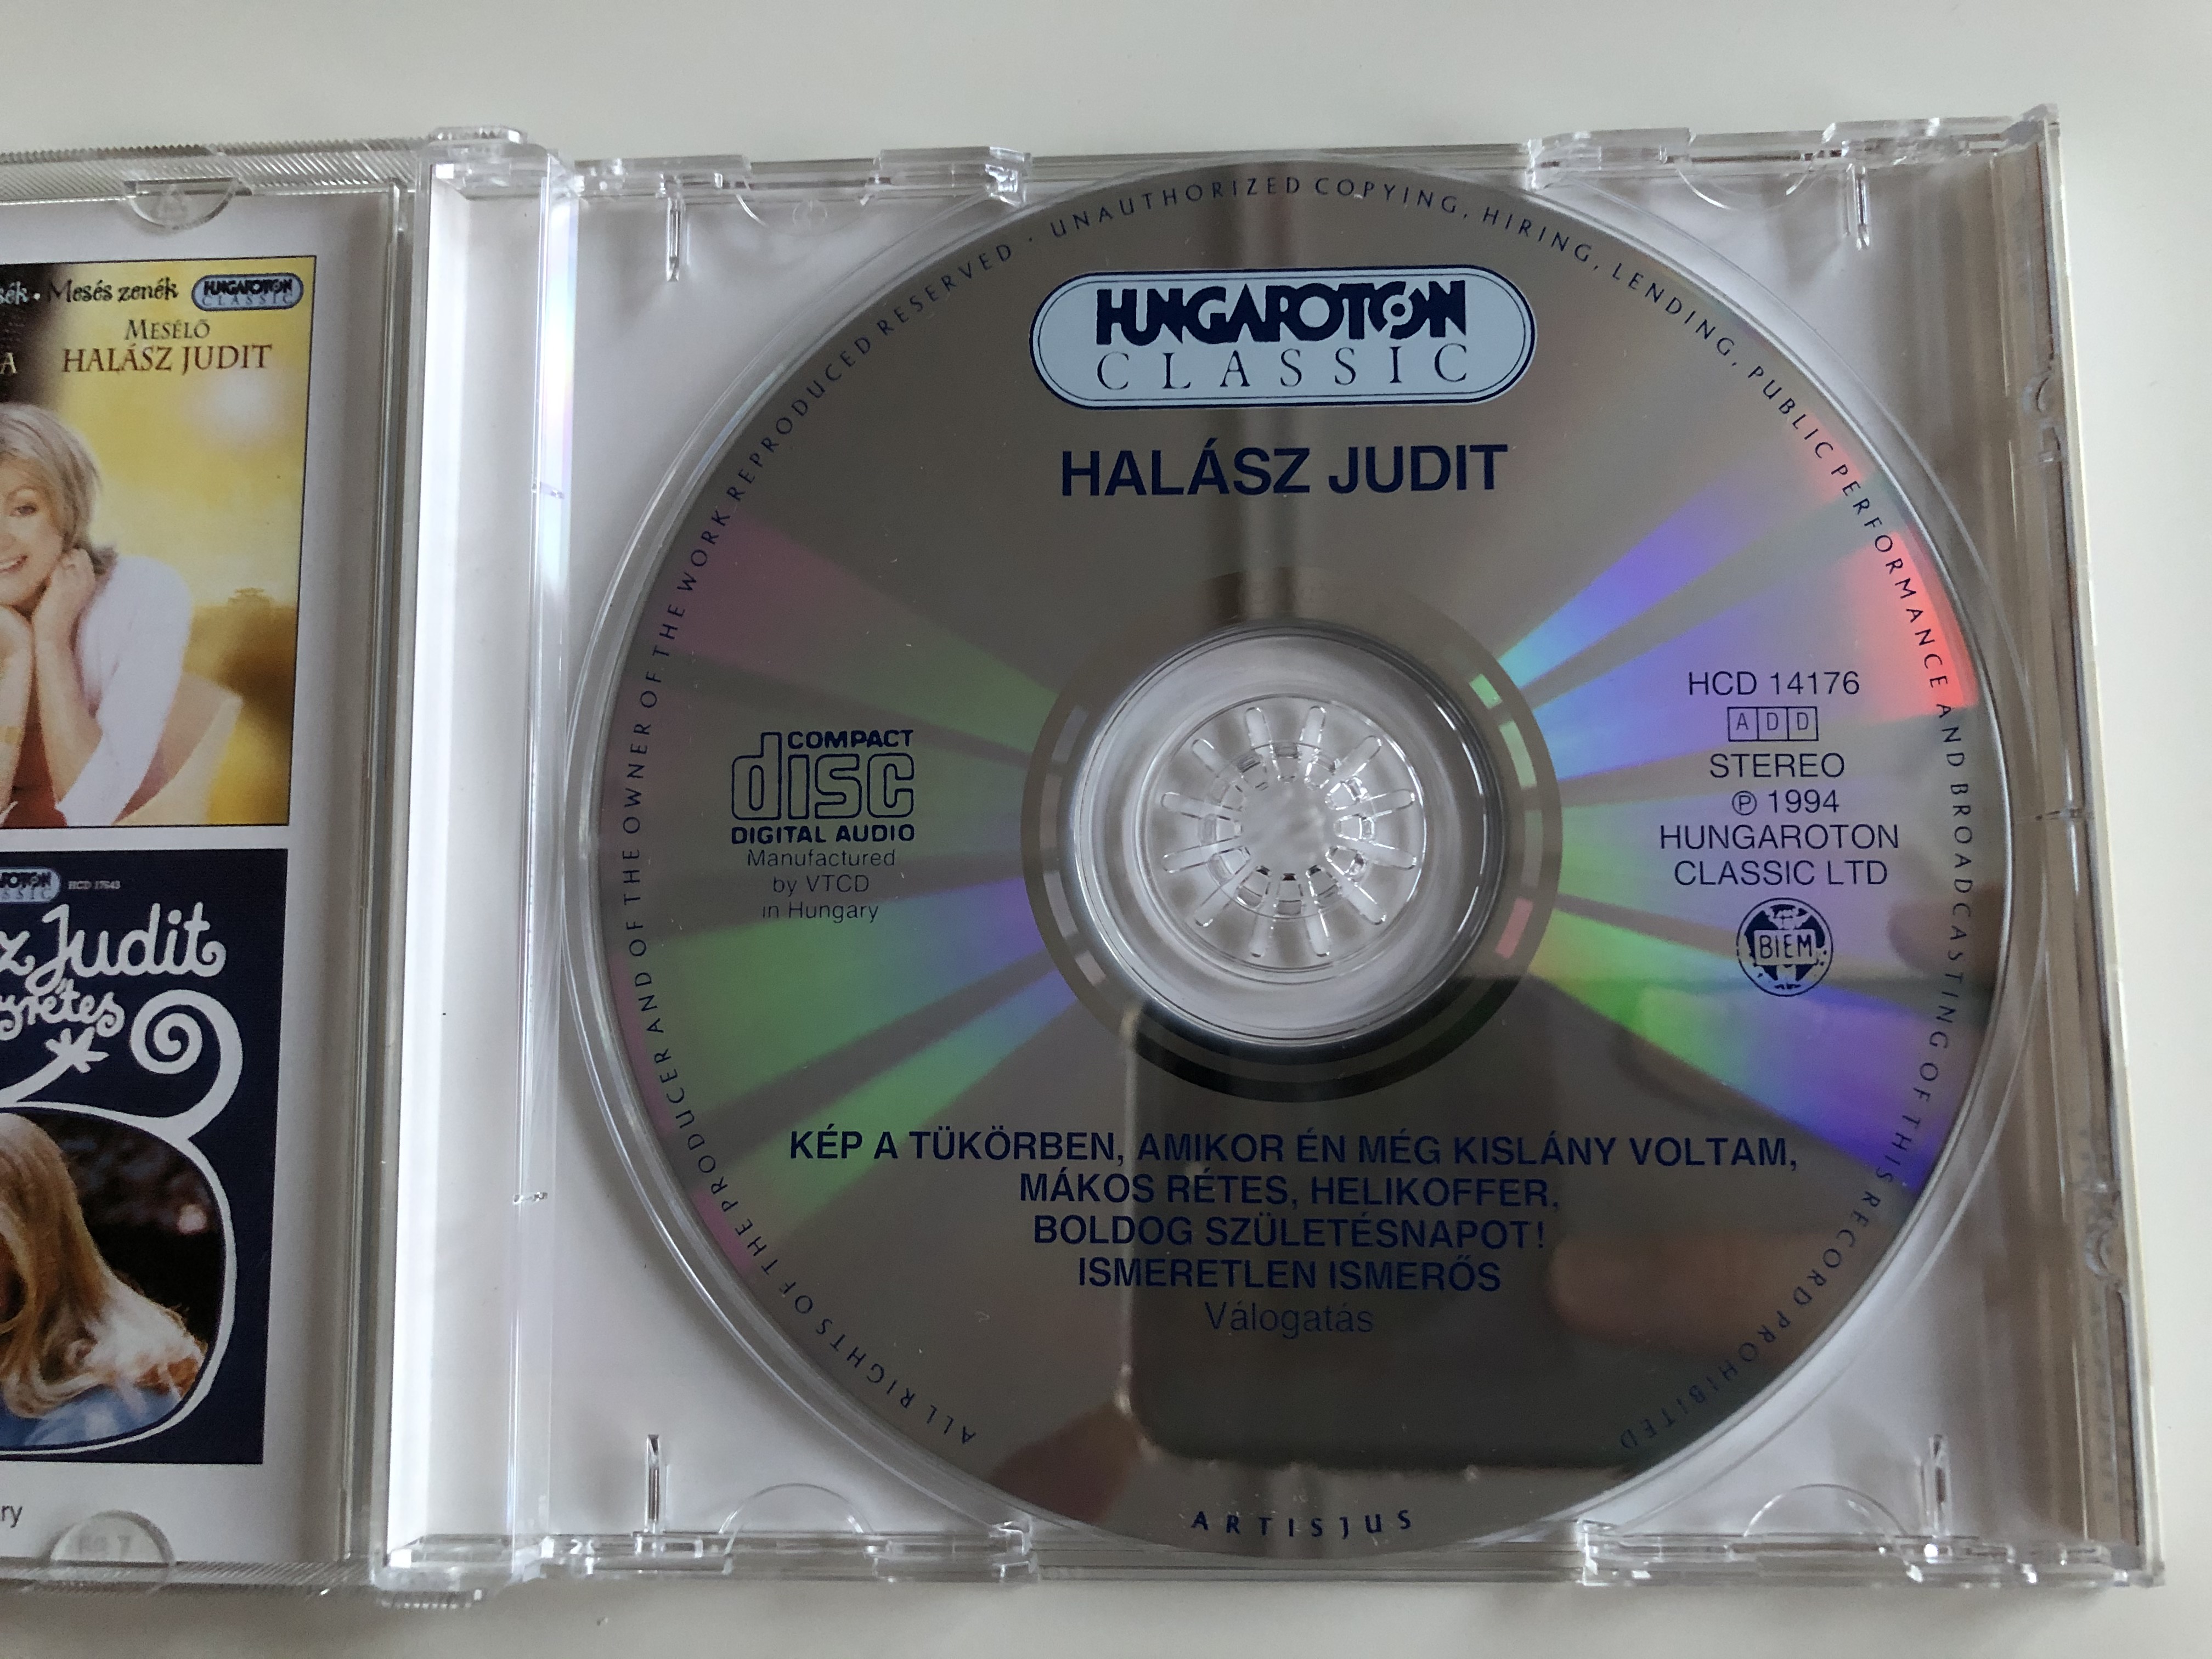 hal-sz-judit-hungaroton-classic-audio-cd-1994-stereo-hcd-14176-6-.jpg